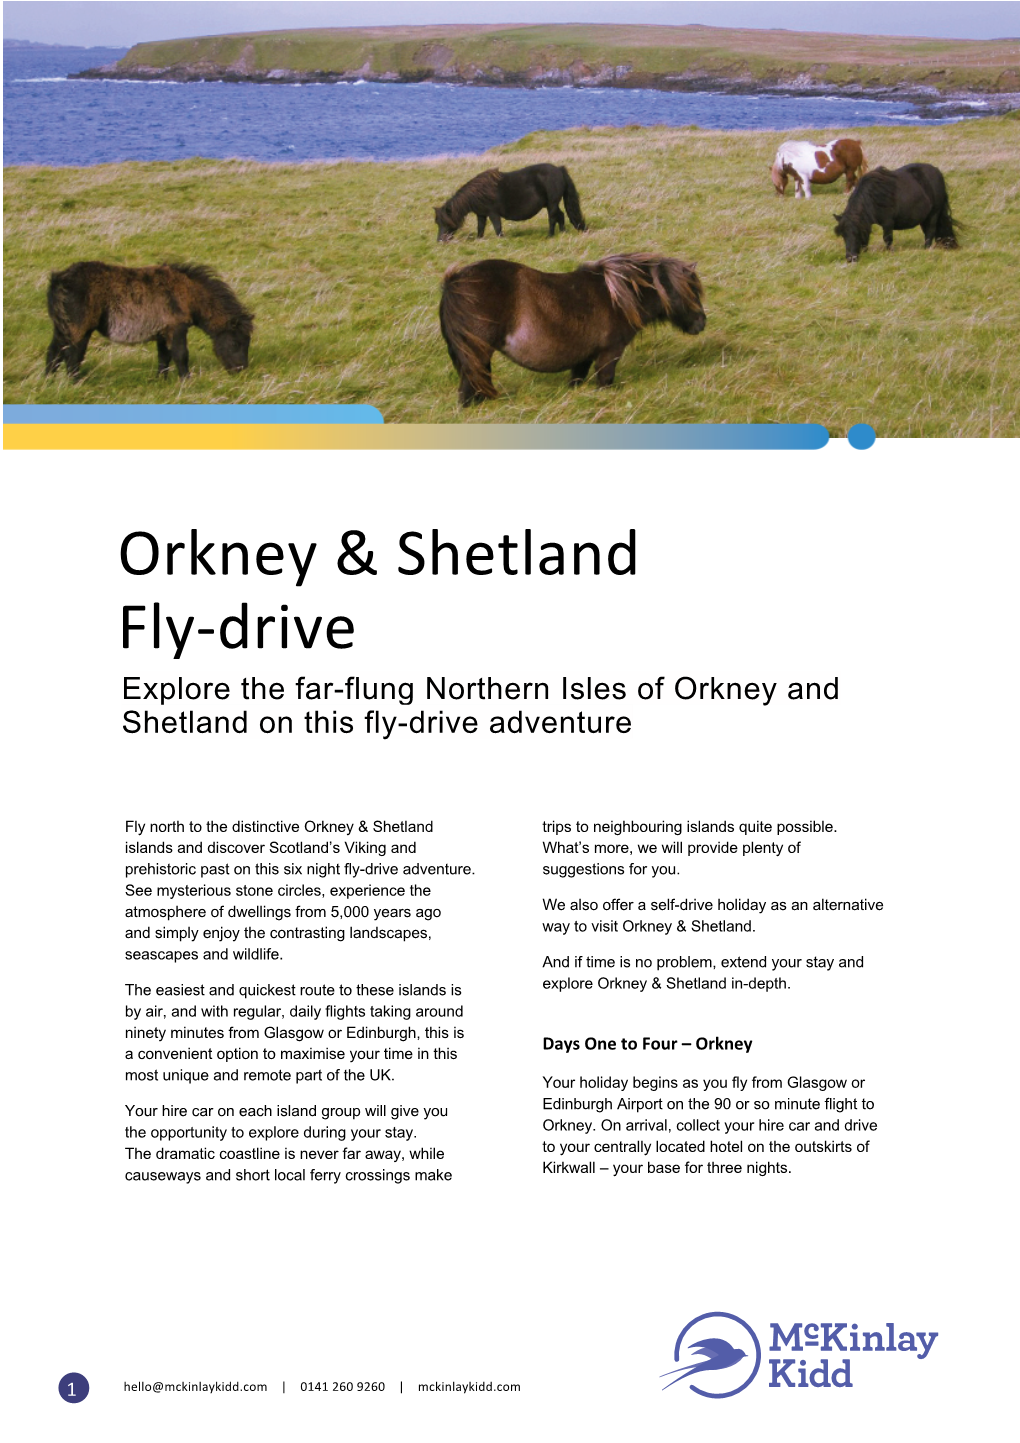 Orkney & Shetland Fly-Drive